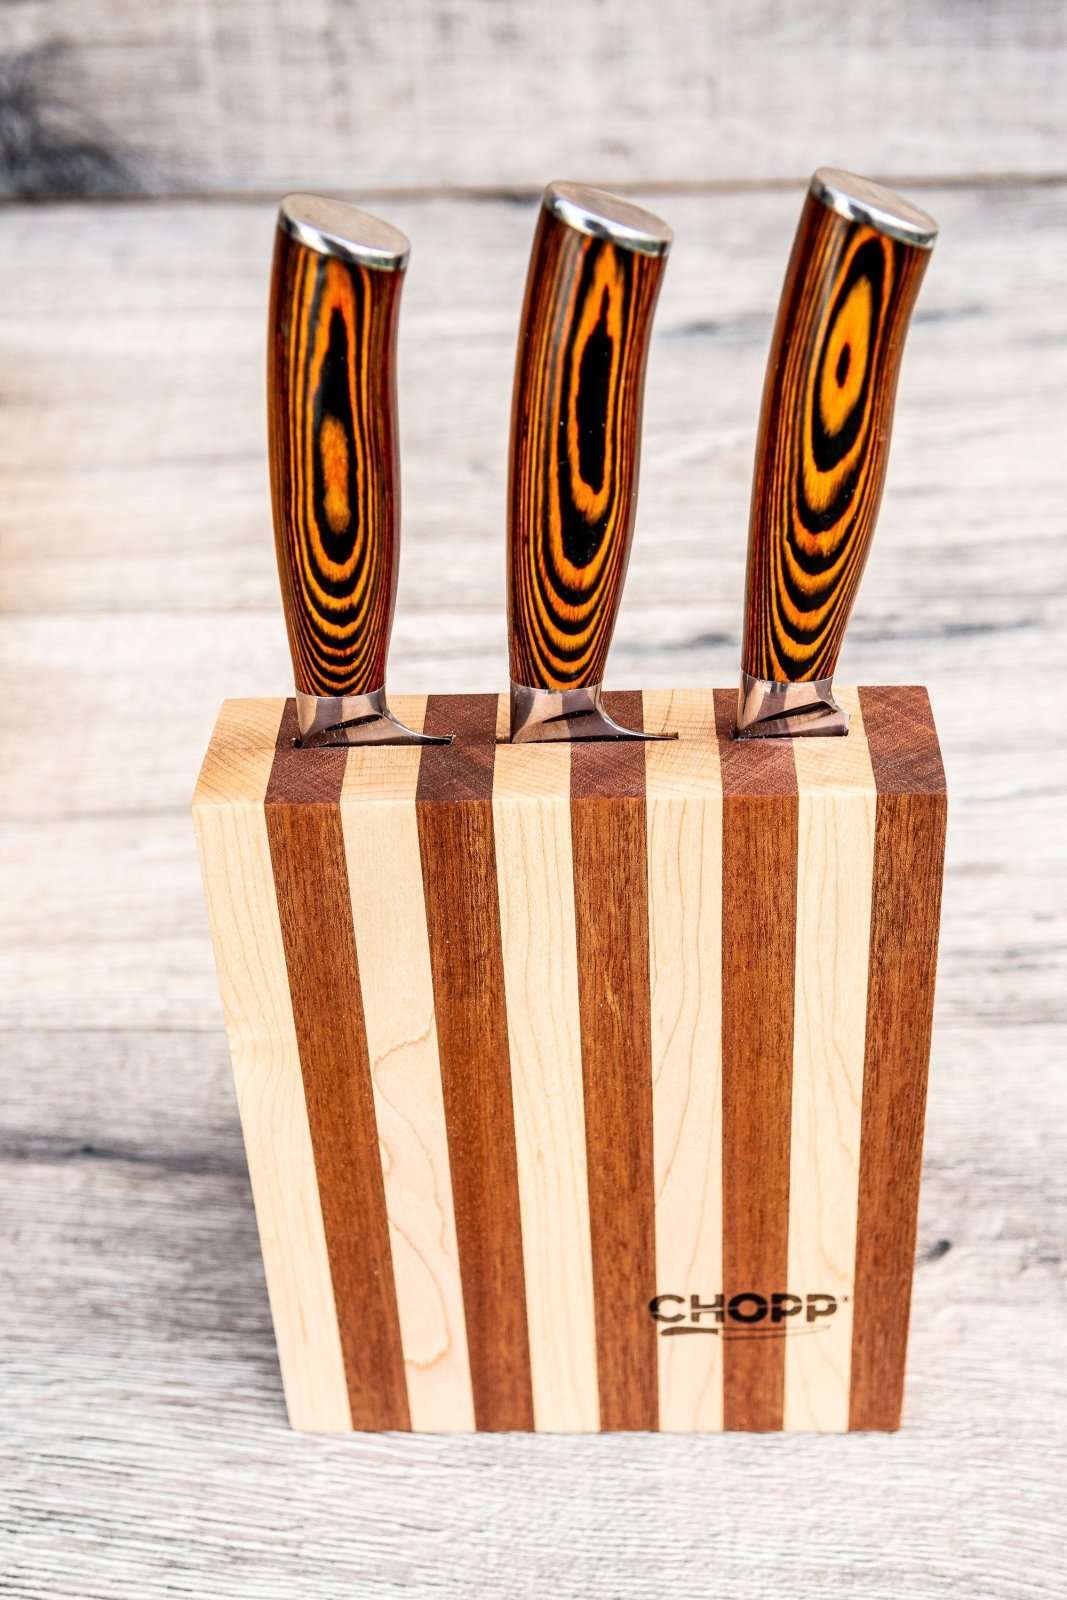 CHOPP® Knife Block - The Cotswold Knife Company